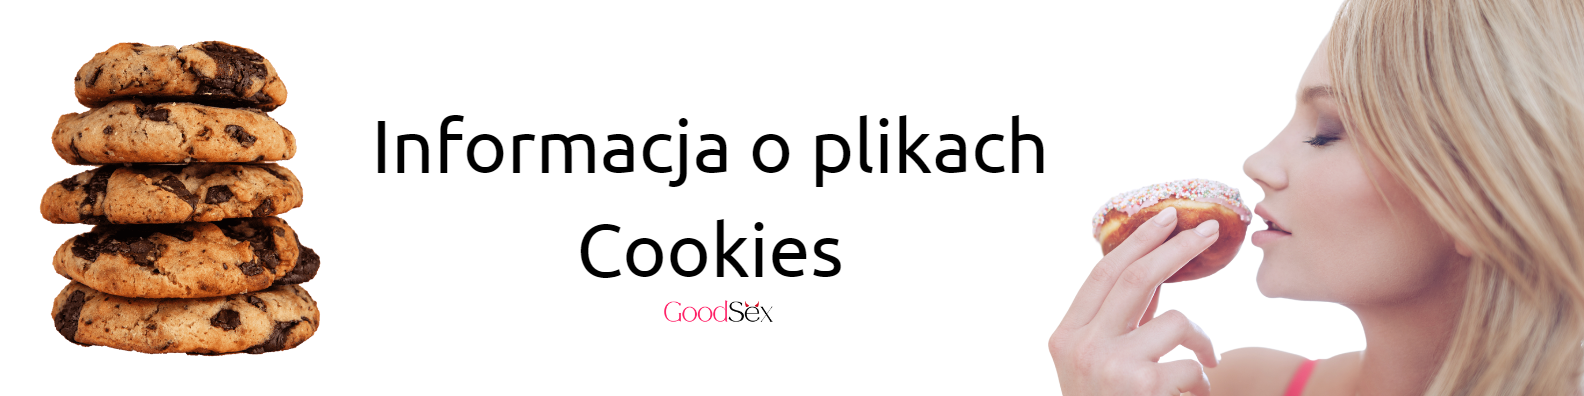 informacja o cookies